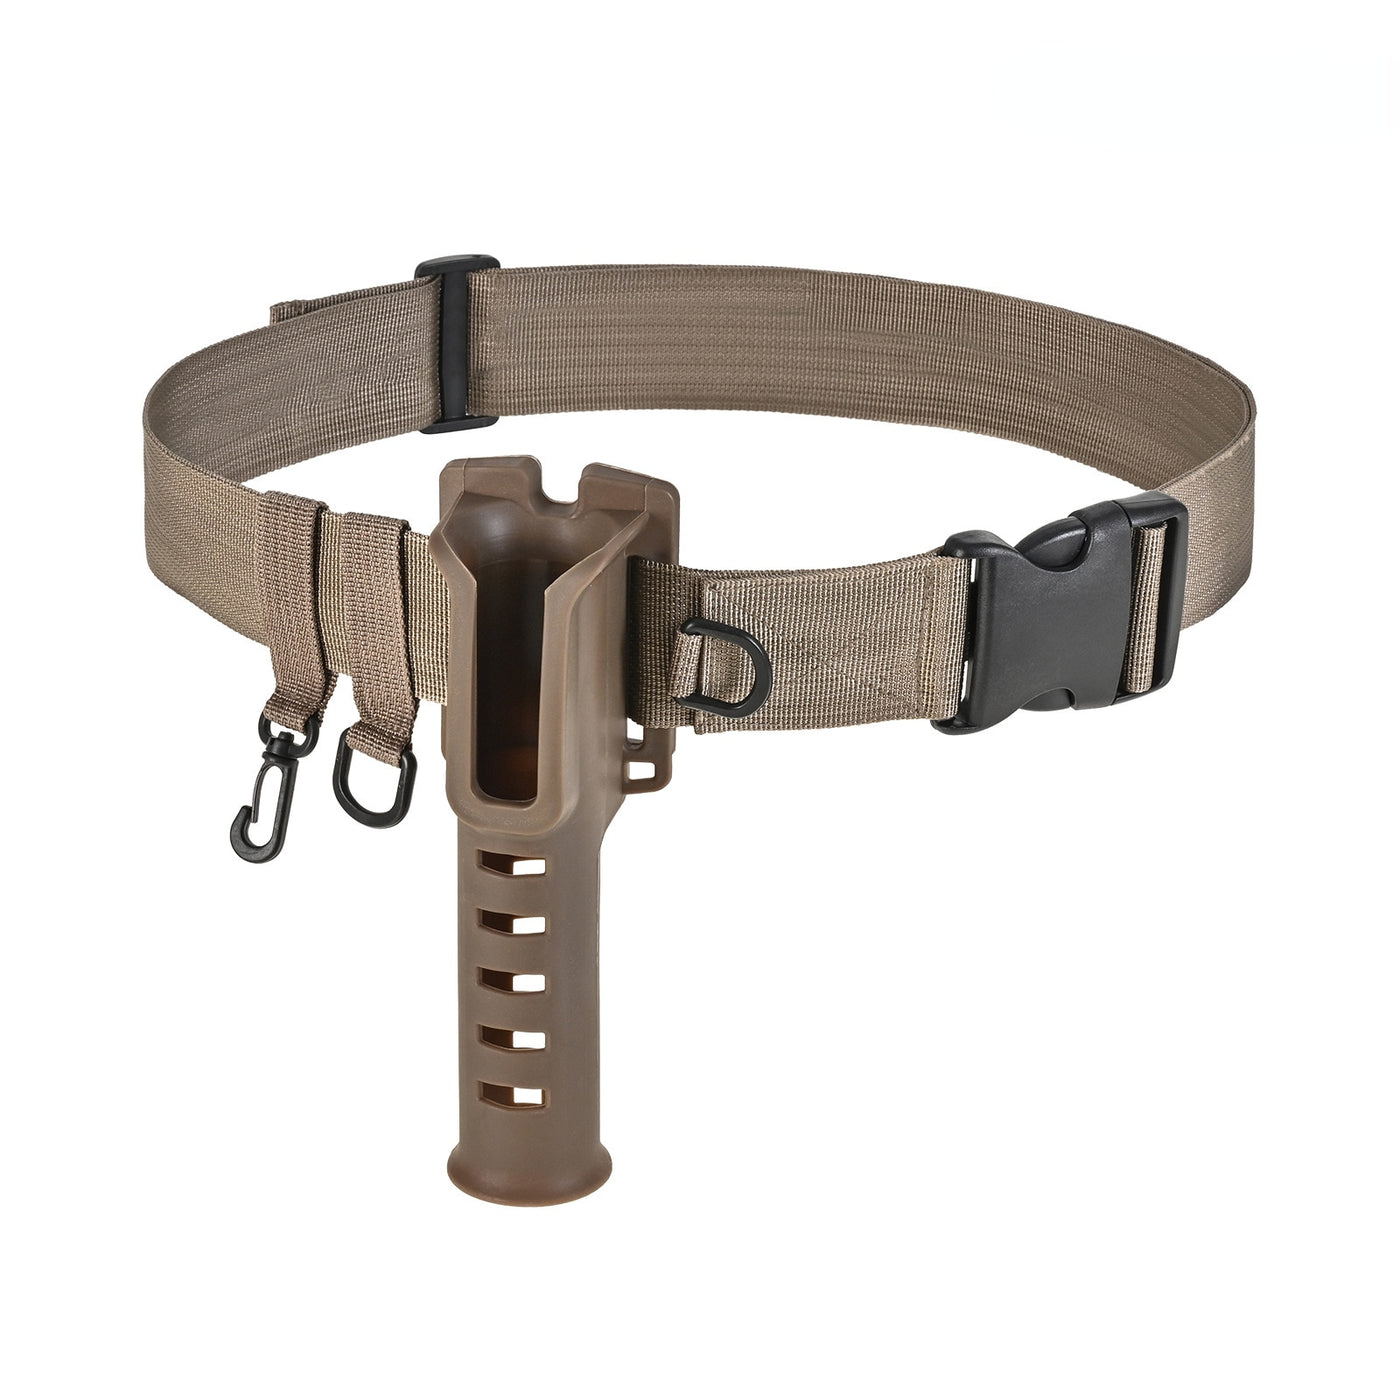 Portable Belt Rod Holder Fishing Gear Tackles